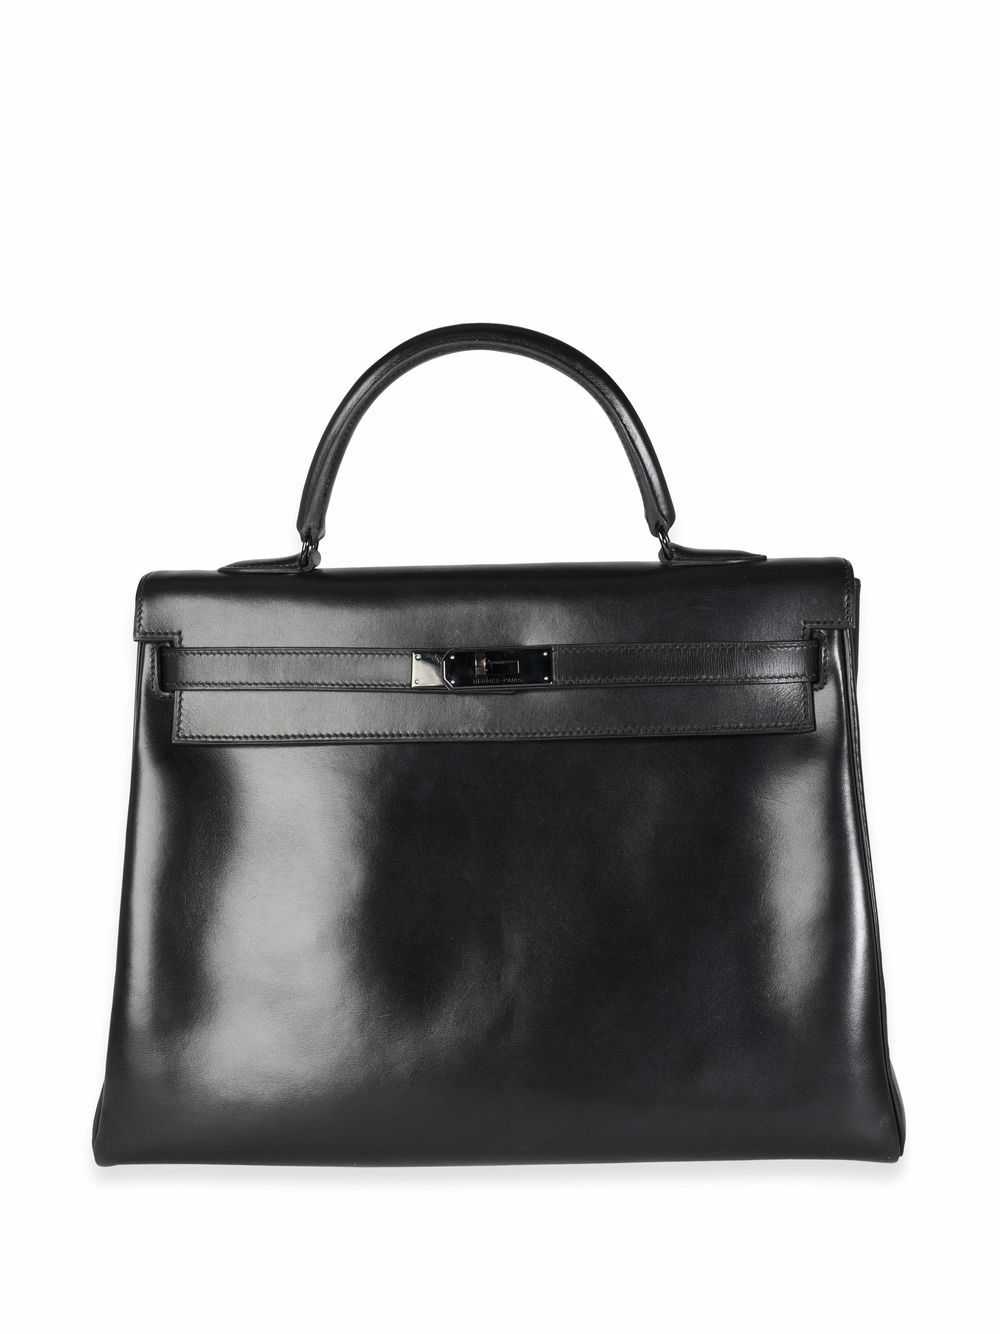 Hermès Pre-Owned Kelly 35 handbag - Black - image 1